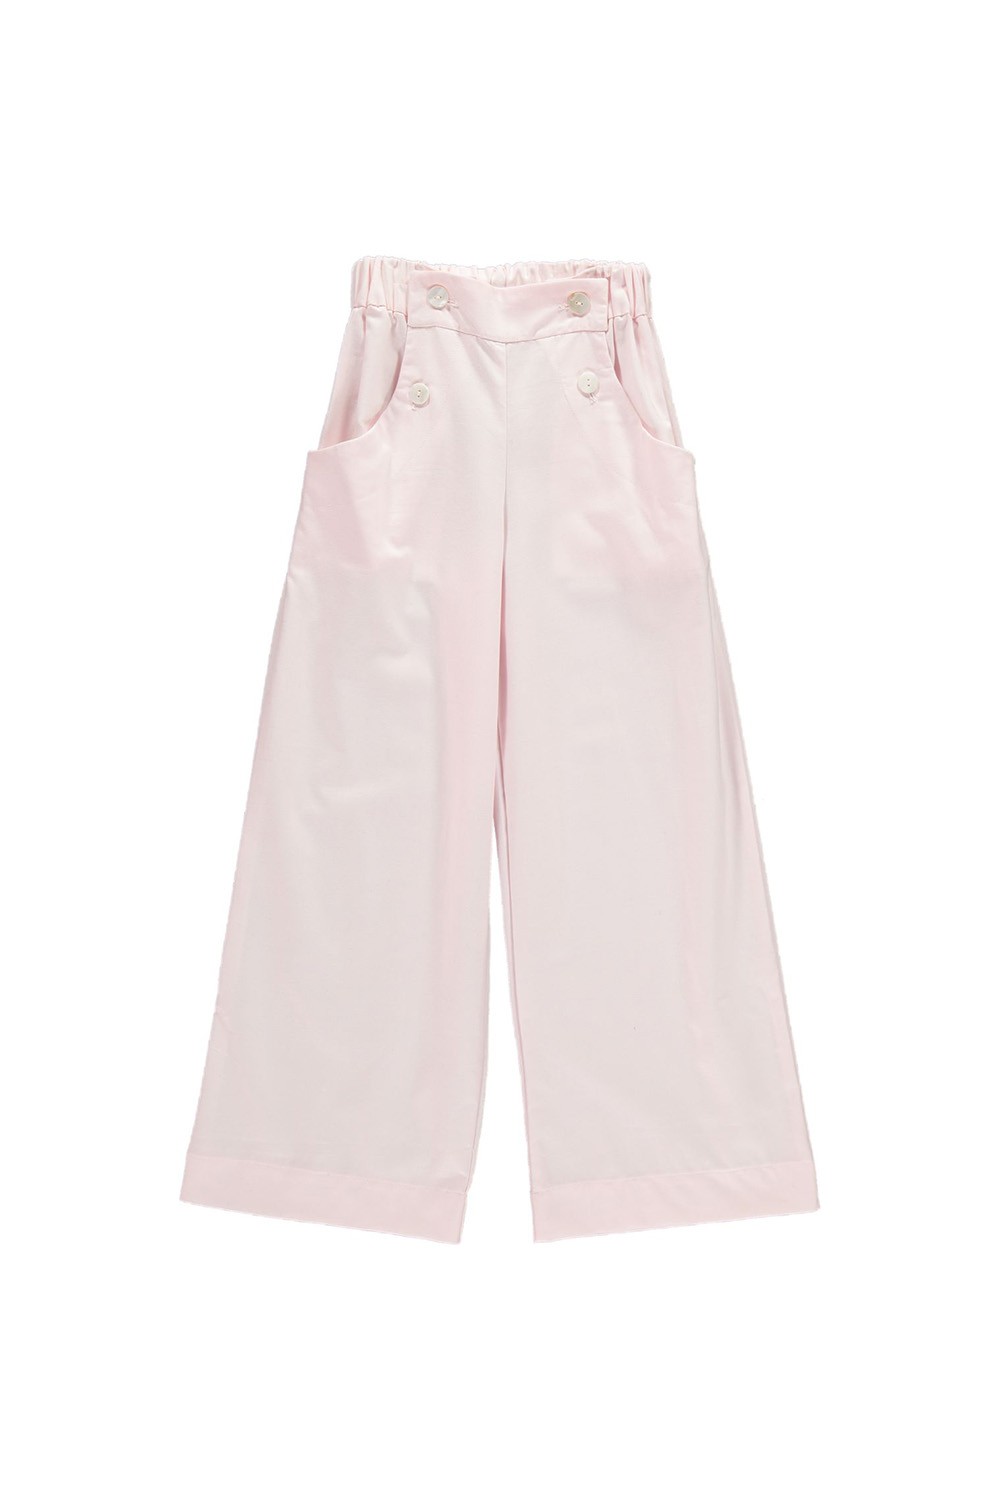 Pantalon fille Luco en toile de coton bio rose